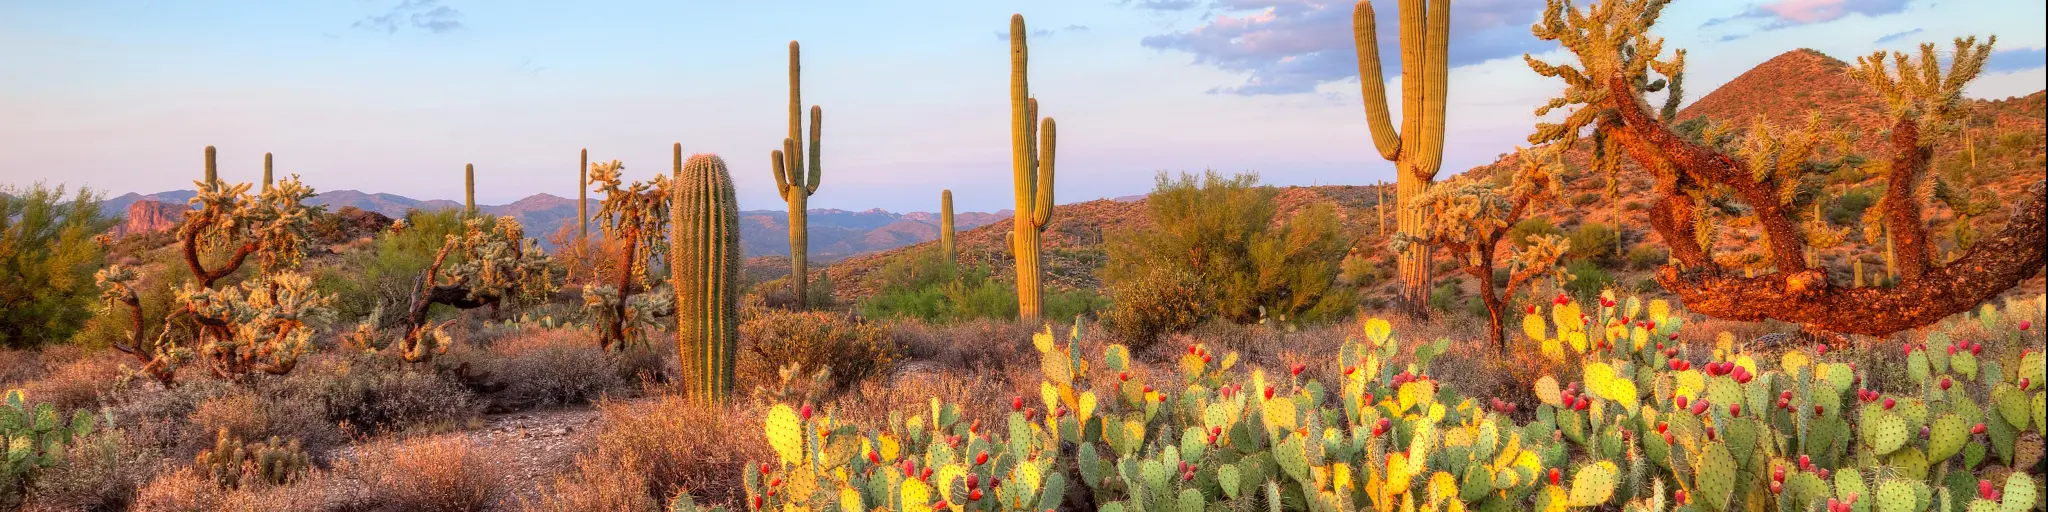 Sonoran Desert, Arizona, USA with late light illuminating the Saguaros in the Sonoran Desert.